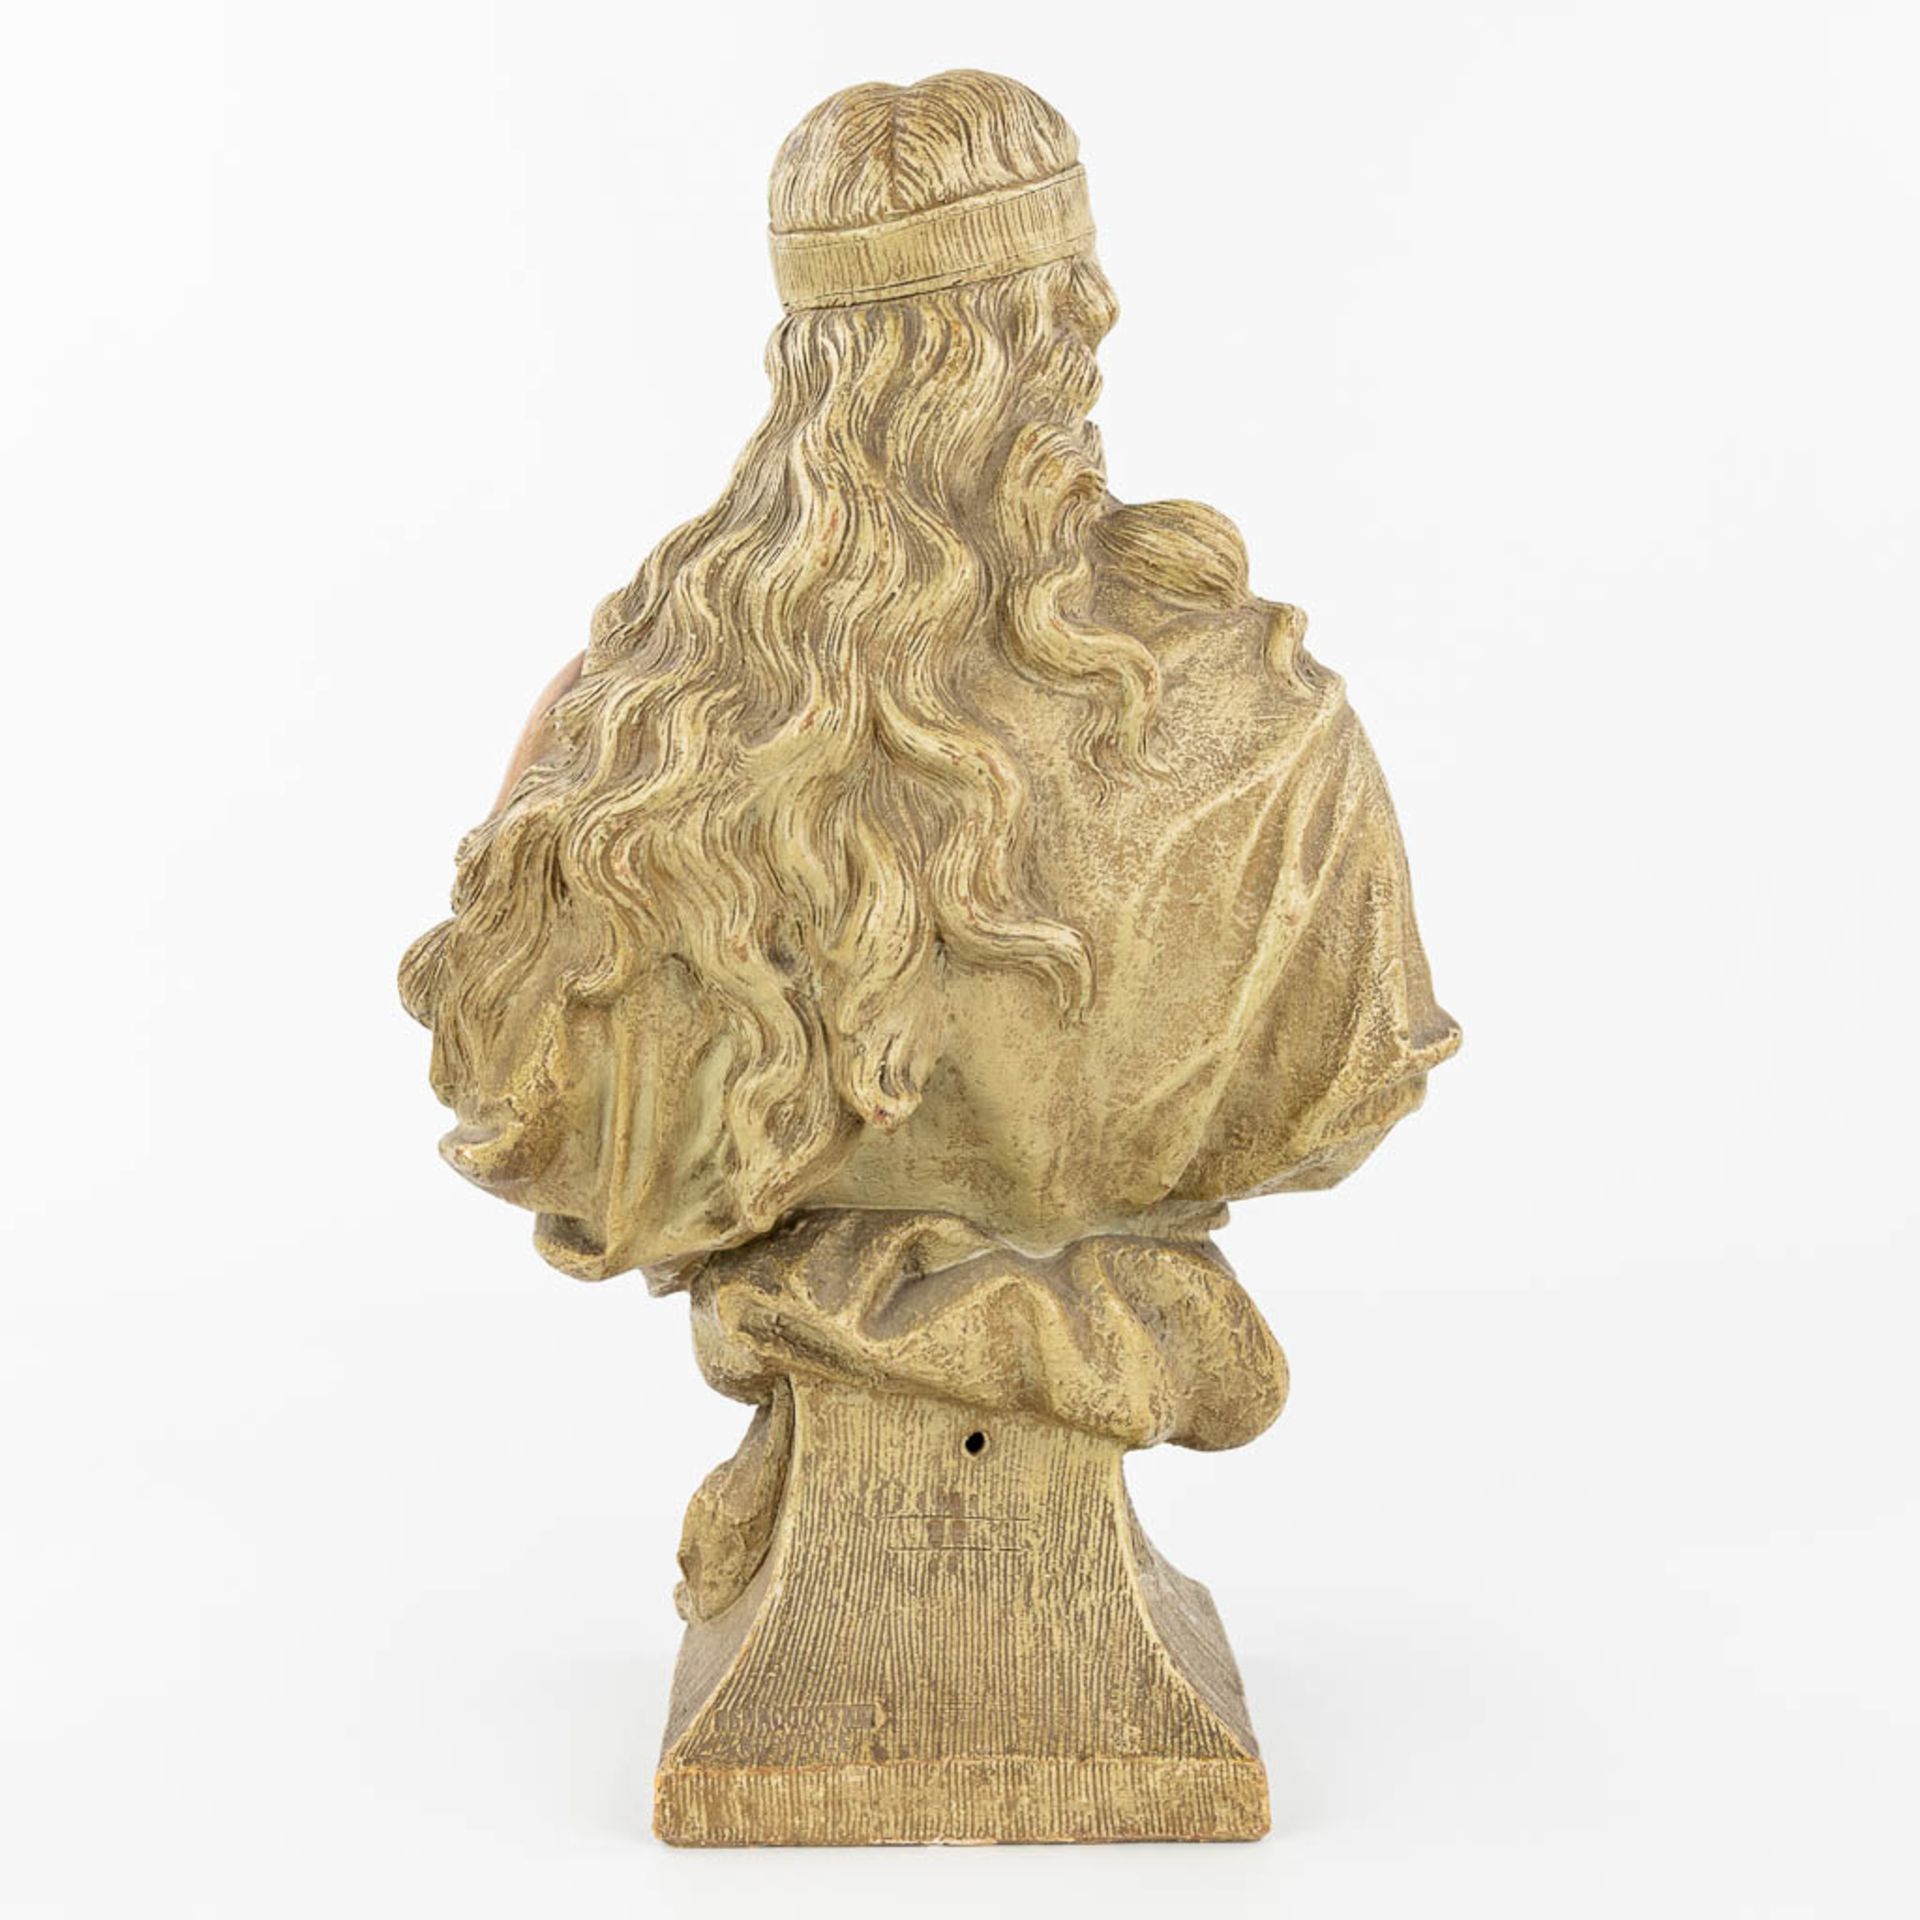 E. TELL (XIX-XX) and Friedrich GOLDSCHEIDER (1845-1897) 'Judith' a buste made of terracotta, for Gol - Image 8 of 14